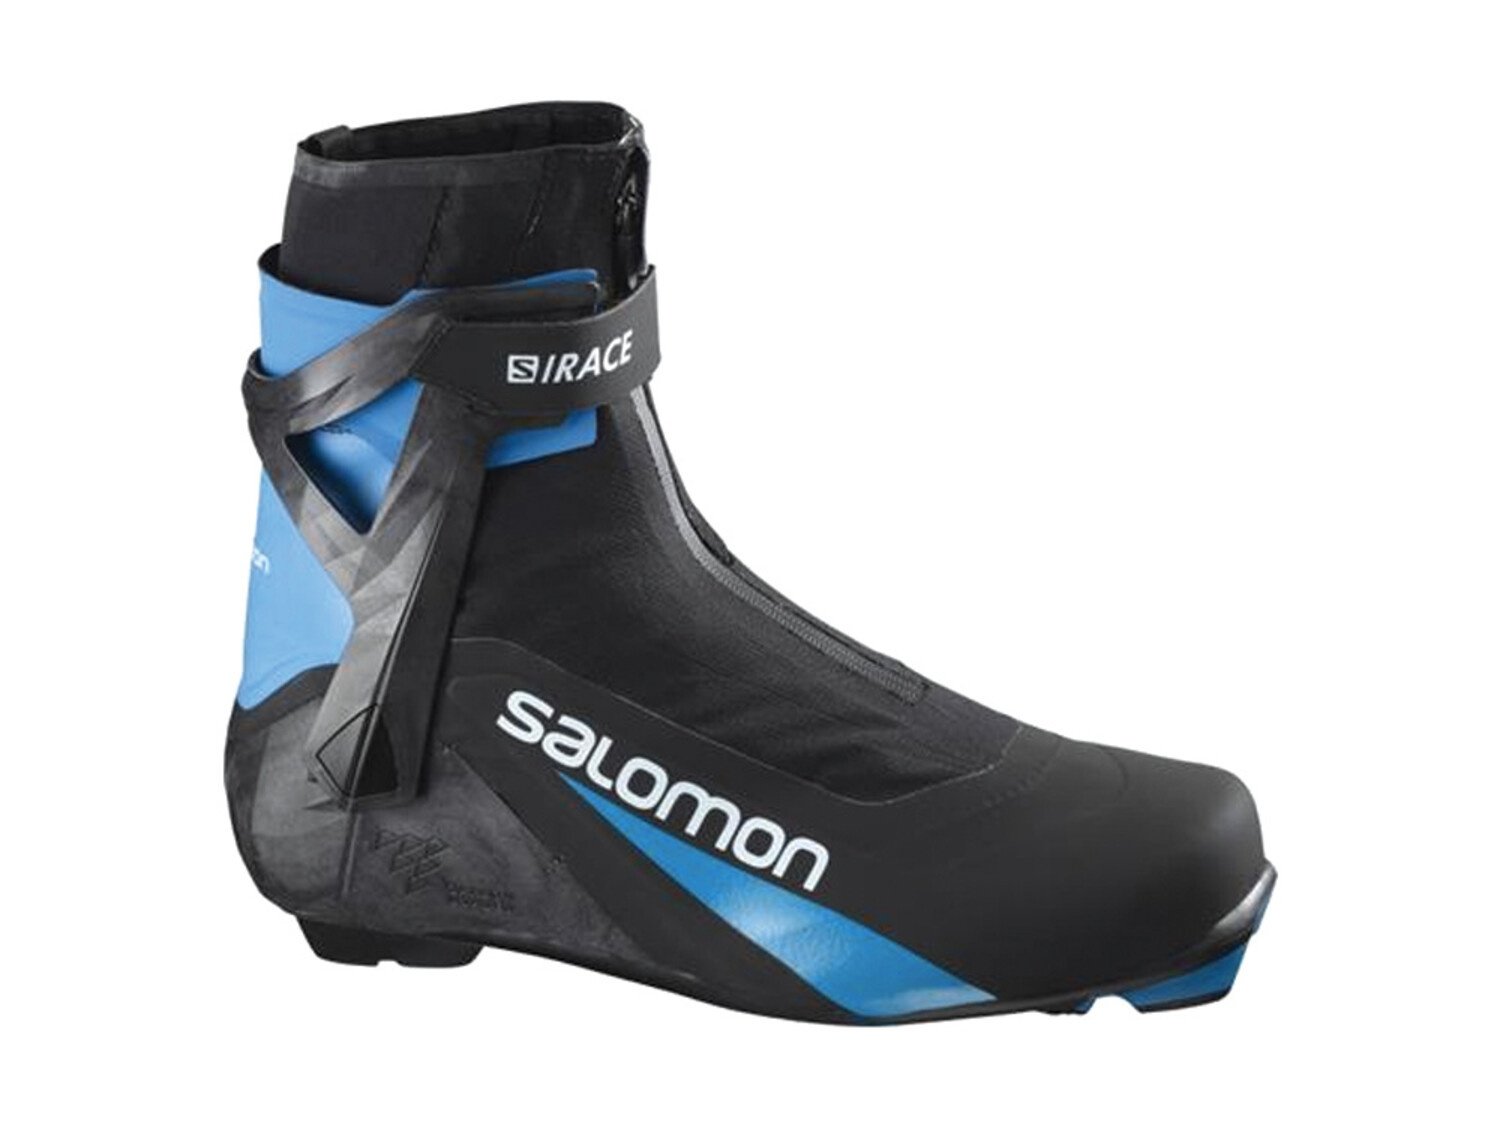 Salomon - S/Race Carbon Skate Prolink